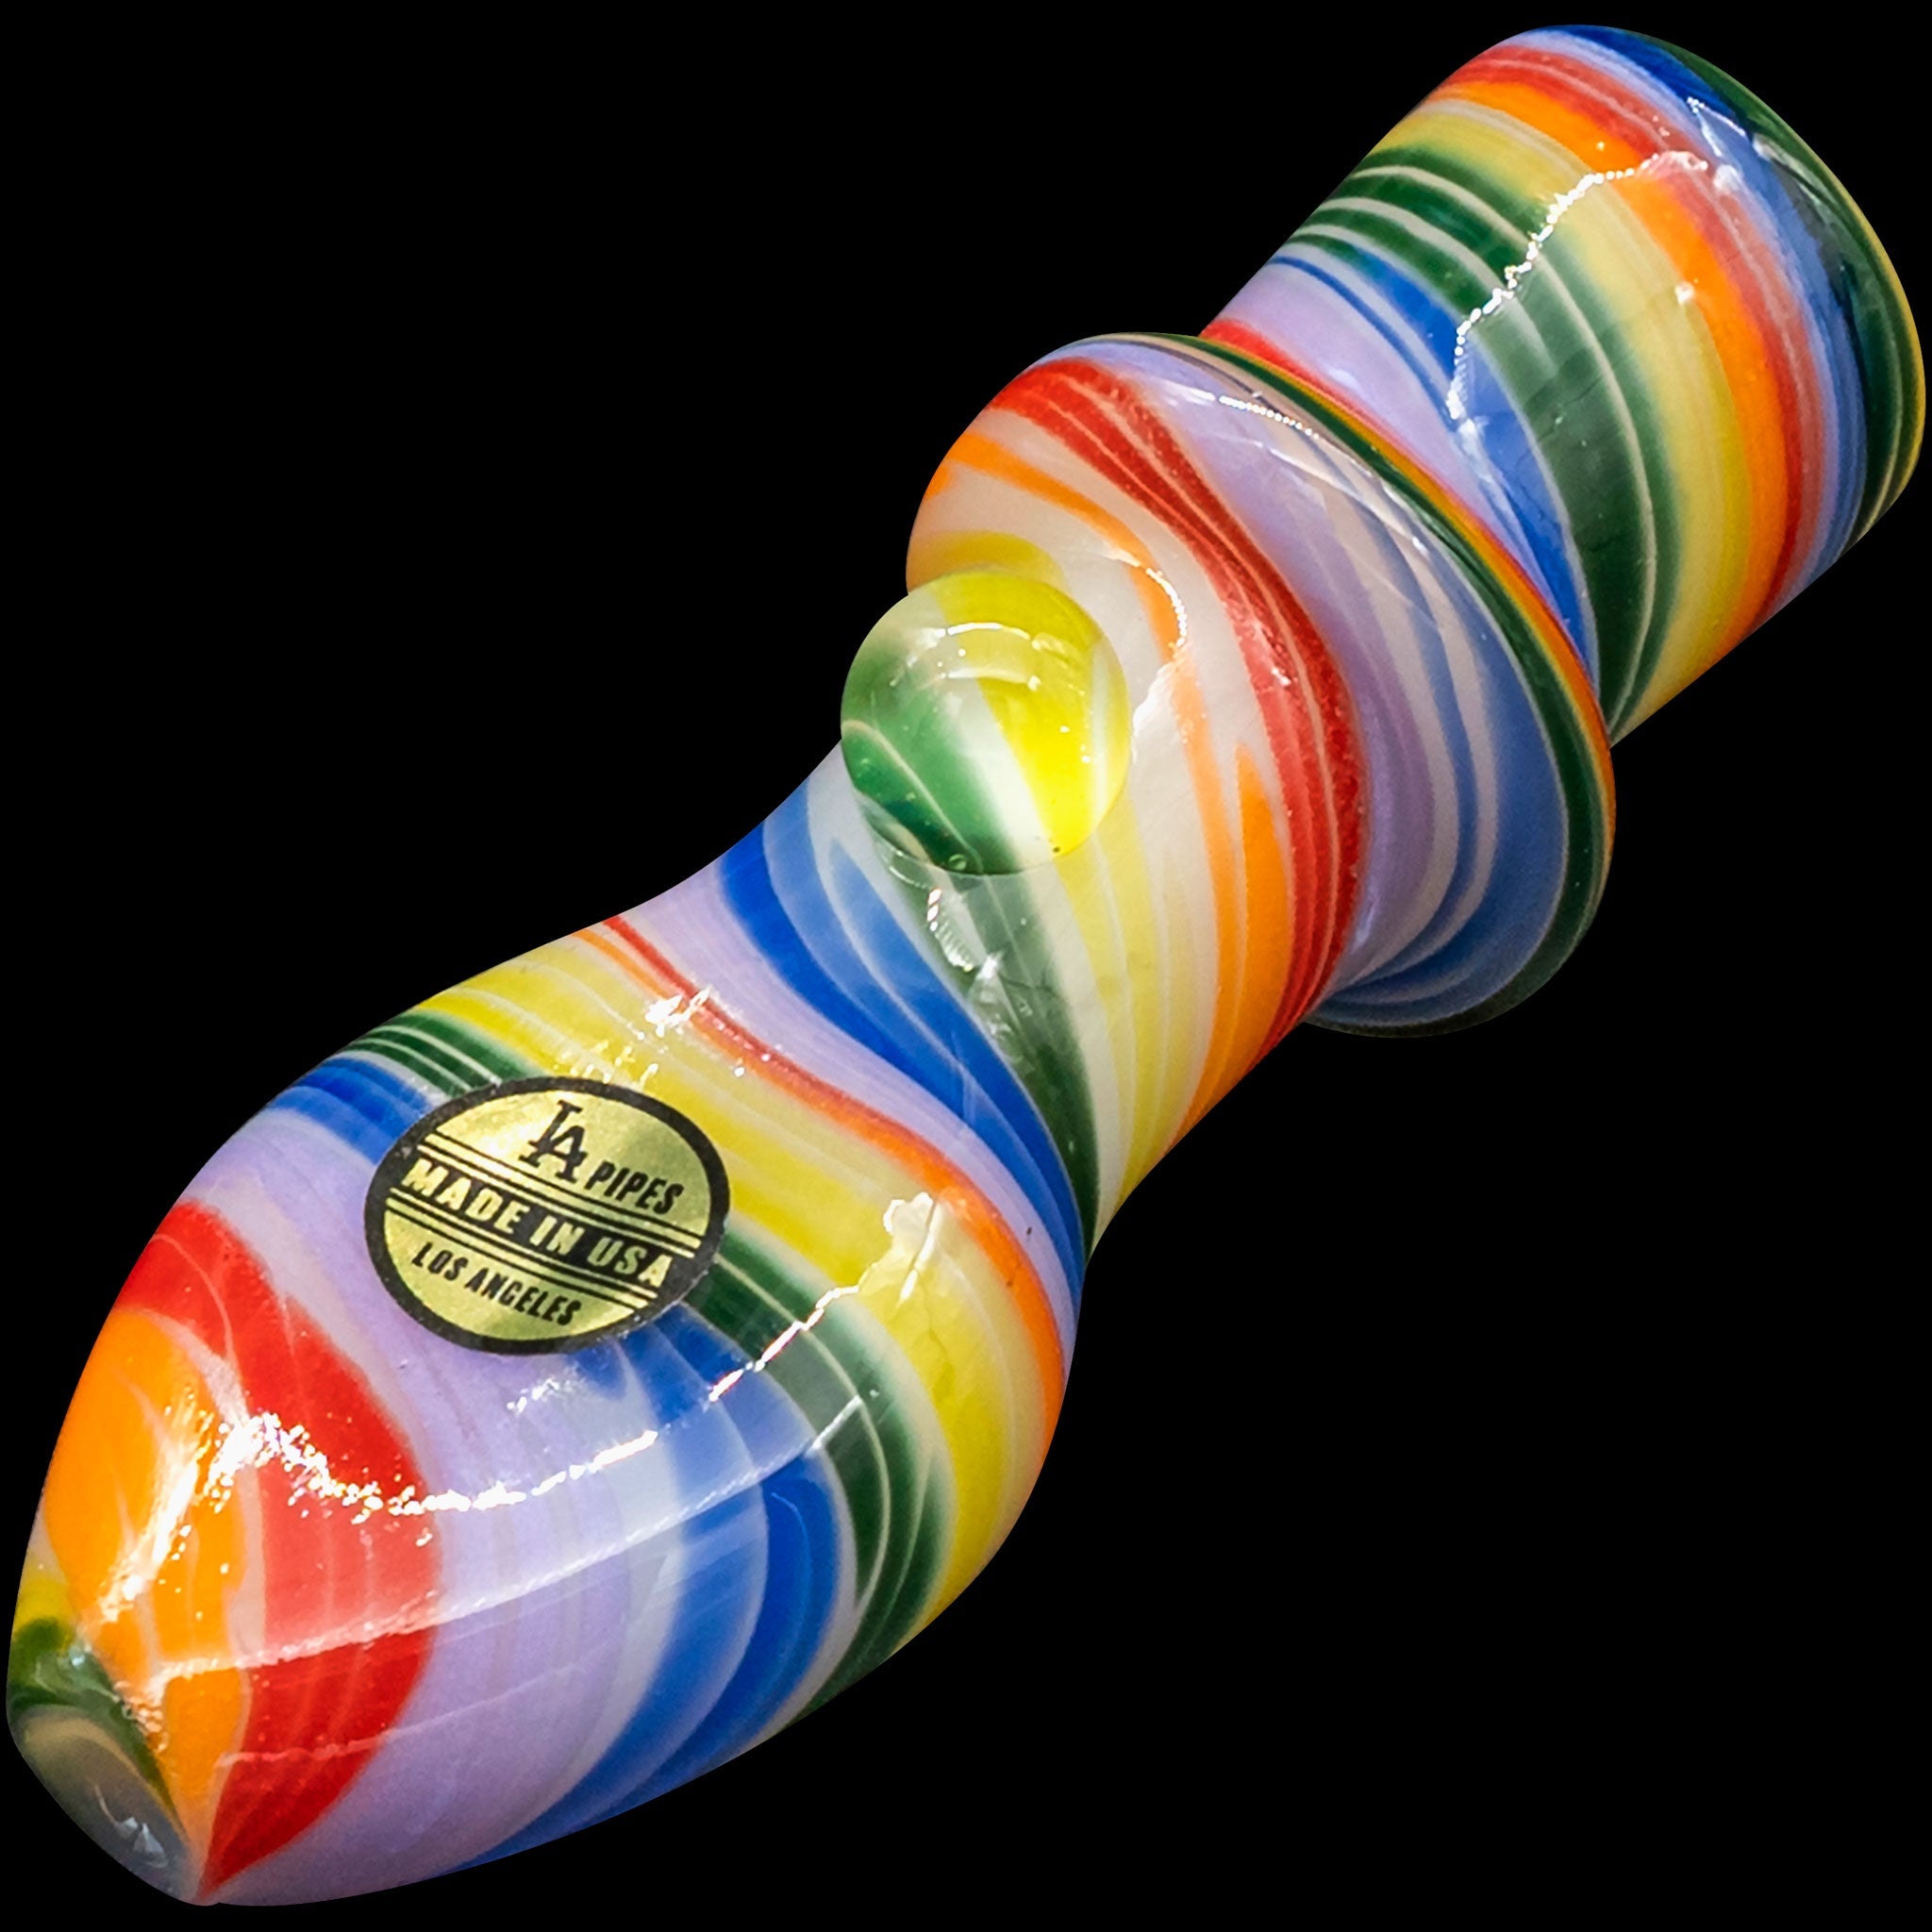 LA Pipes "Rainbow Tornado" Chillum Pipe